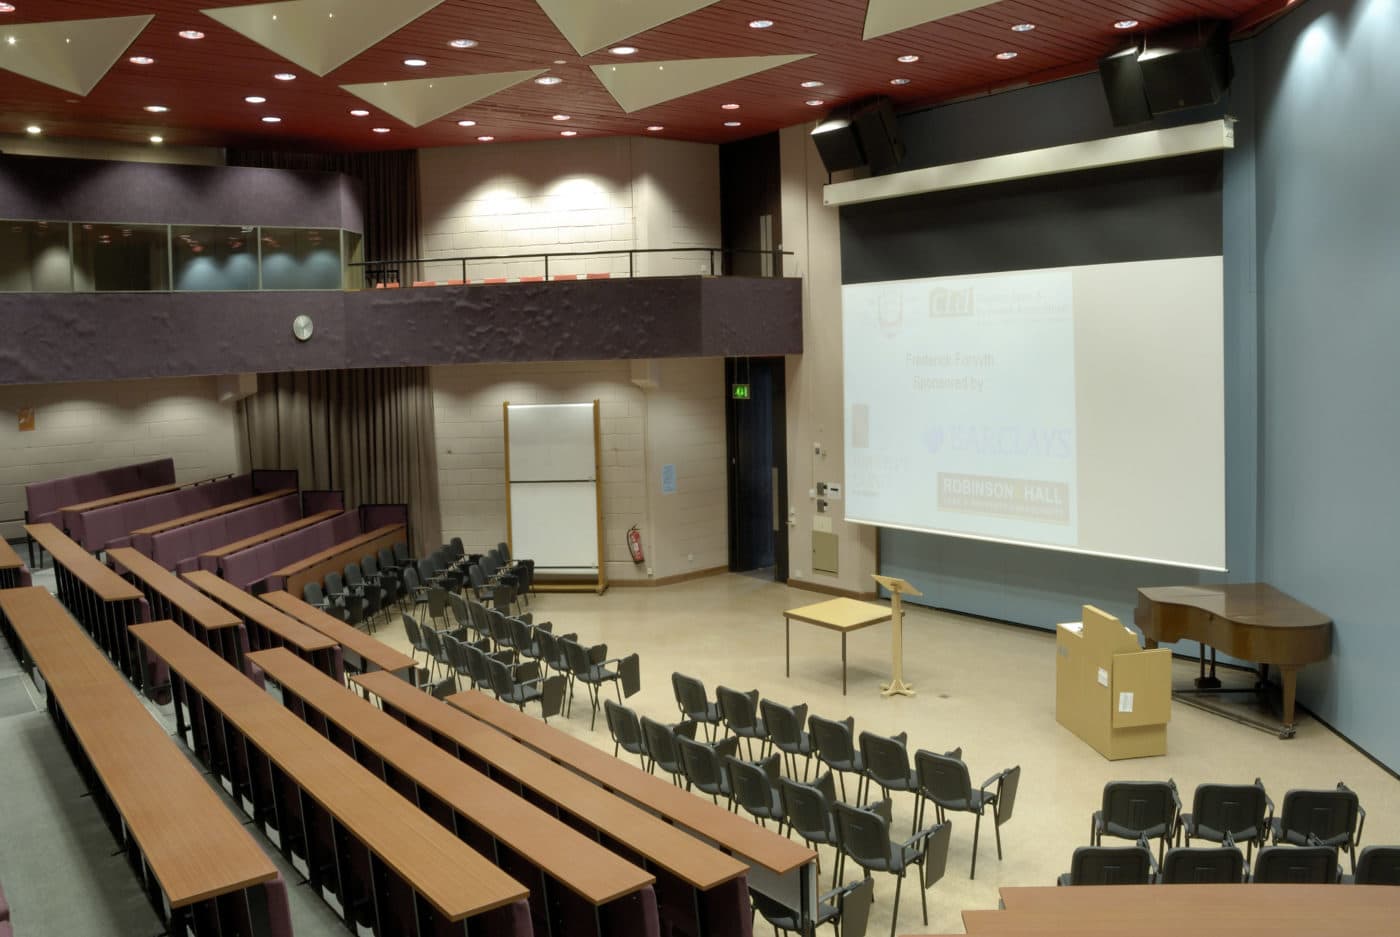 Lecture Theatre Building